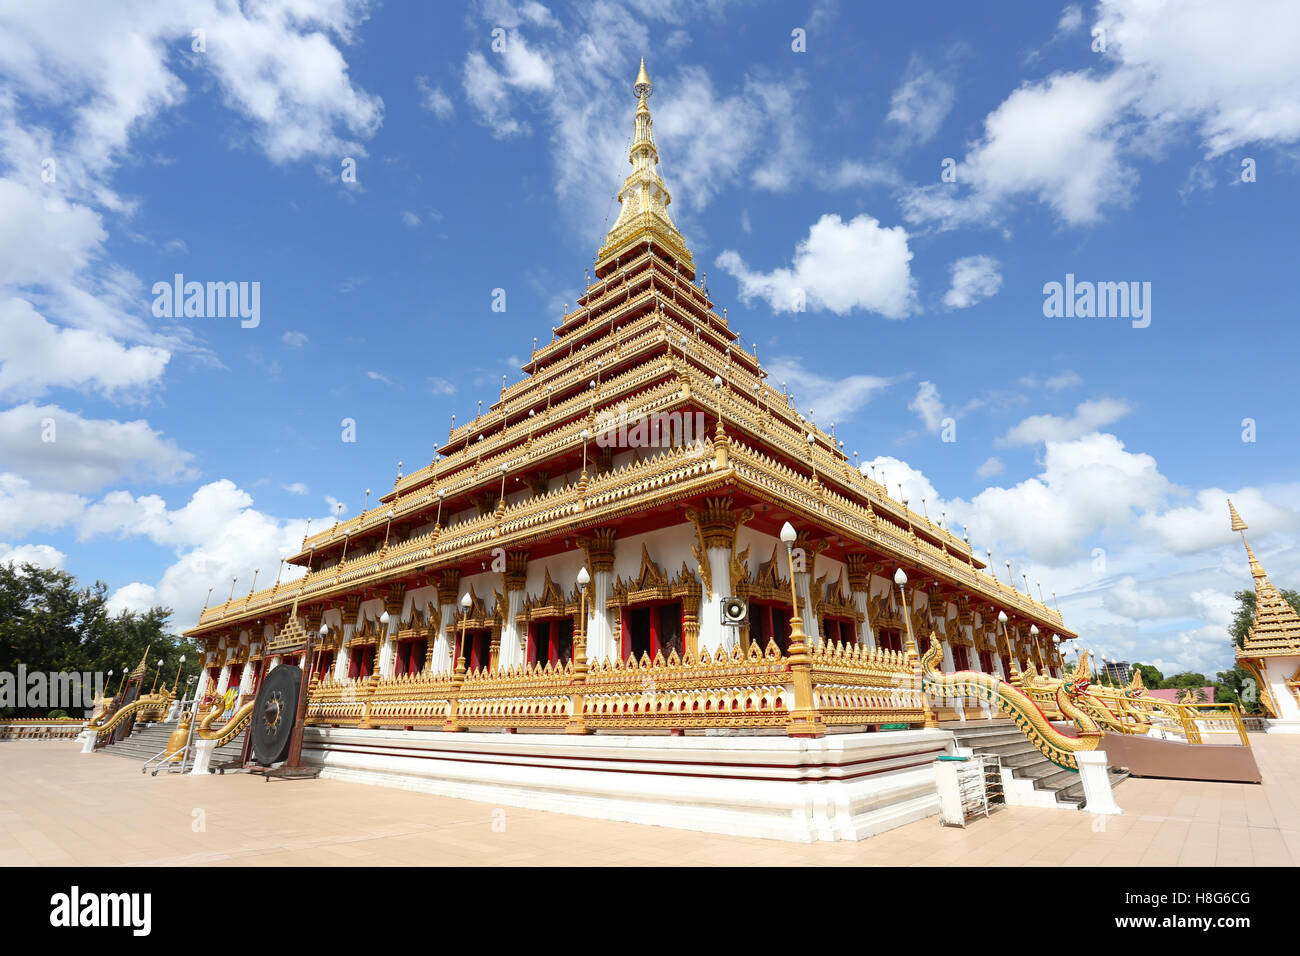 Thailand buddhistische Tempel goldene Stupa in Khonkaen Wahrzeichen, Tempel in Khon Kaen haben lokale Name ist Wat Nong Waeng, am blauen Himmel Stockfoto